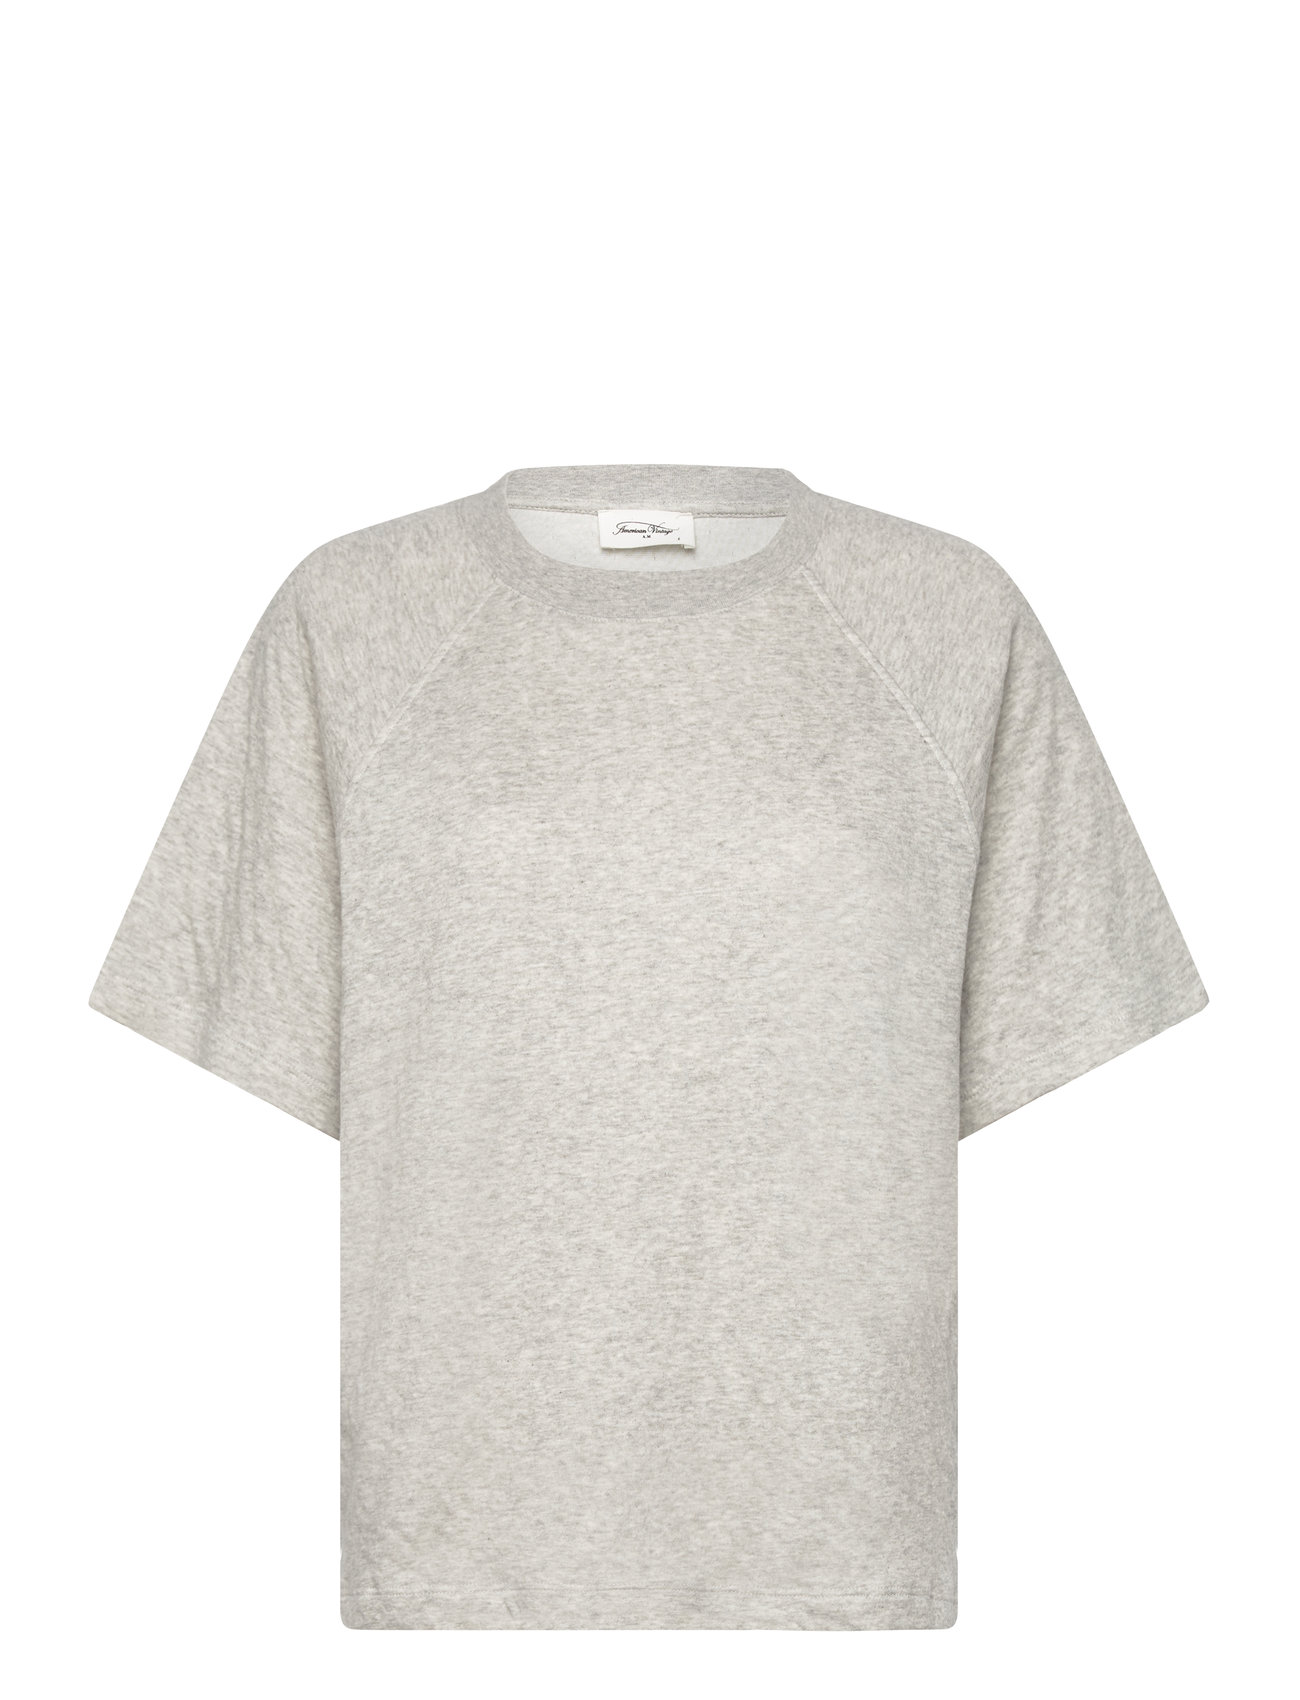 Ruzy Tops T-shirts & Tops Short-sleeved Grey American Vintage